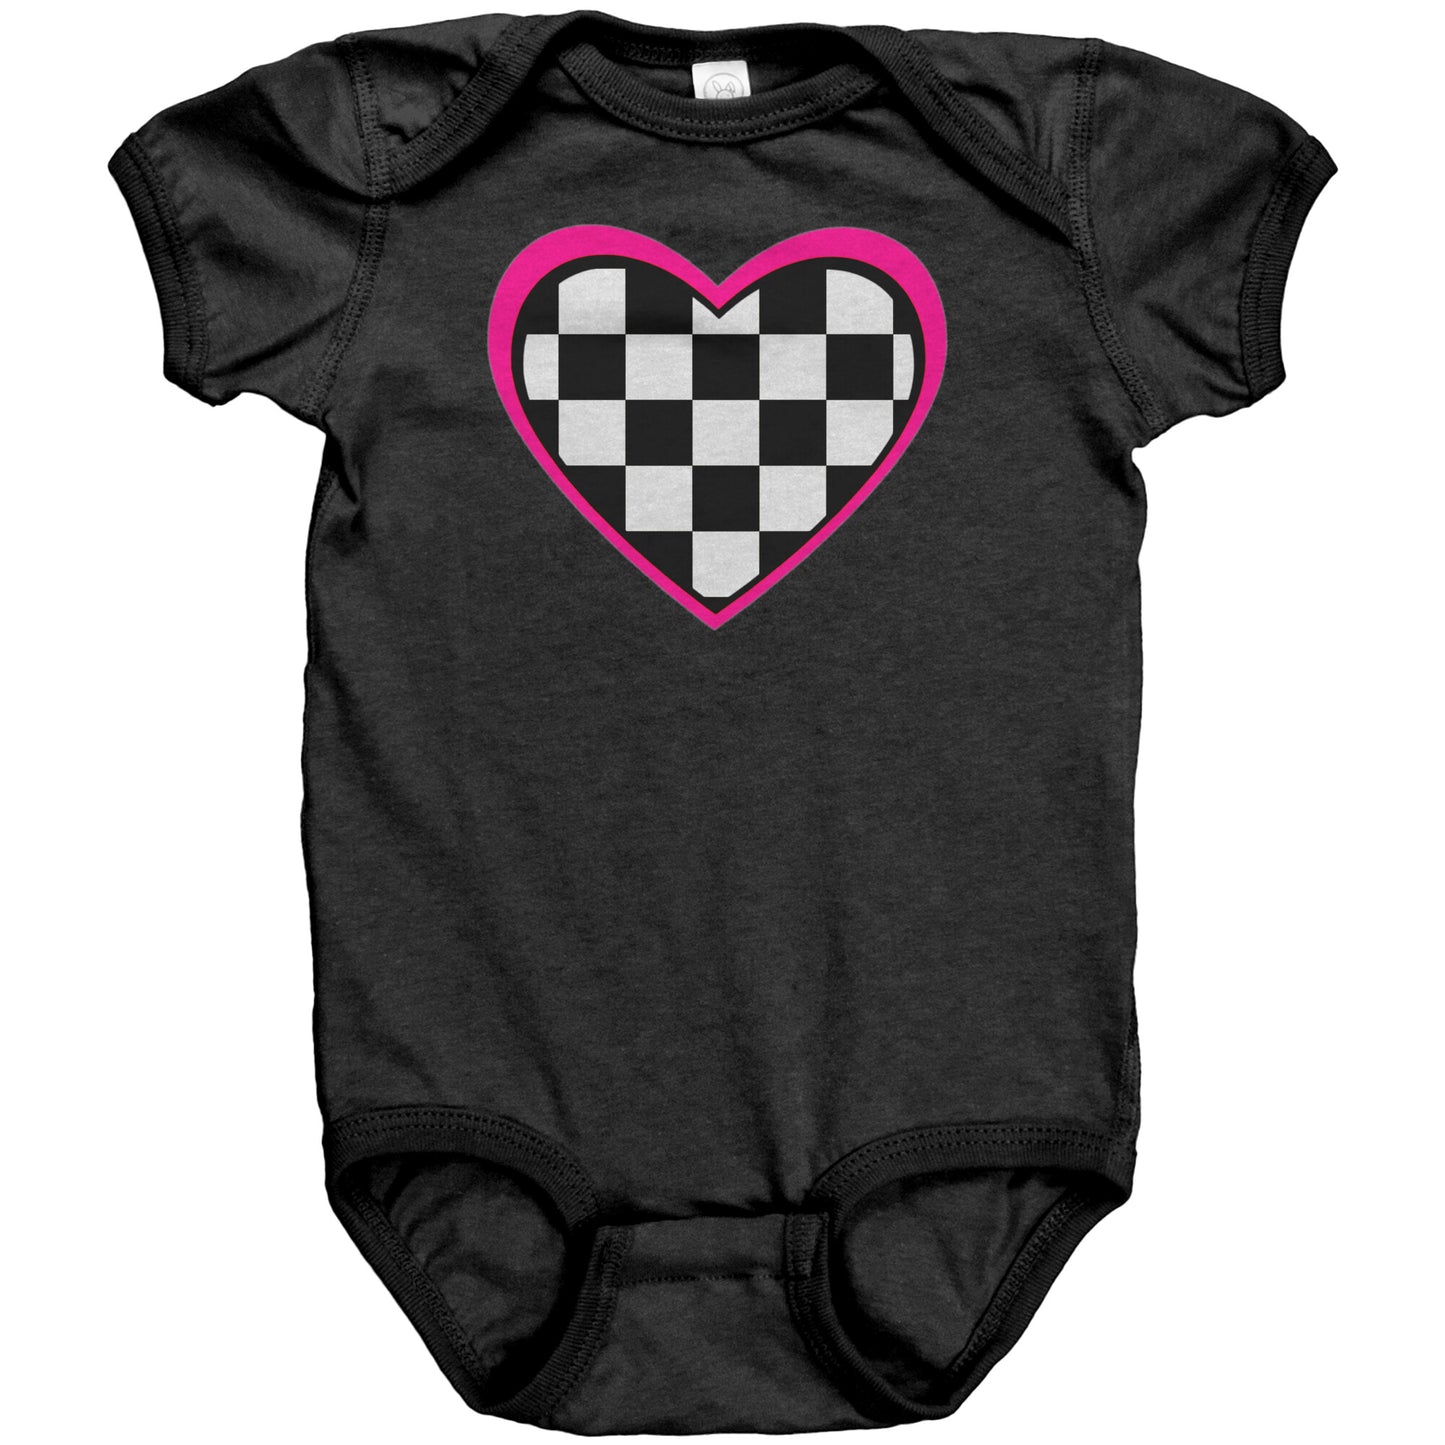 PINK CHECKERED FLAG RACING HEART INFANT BODYSUIT